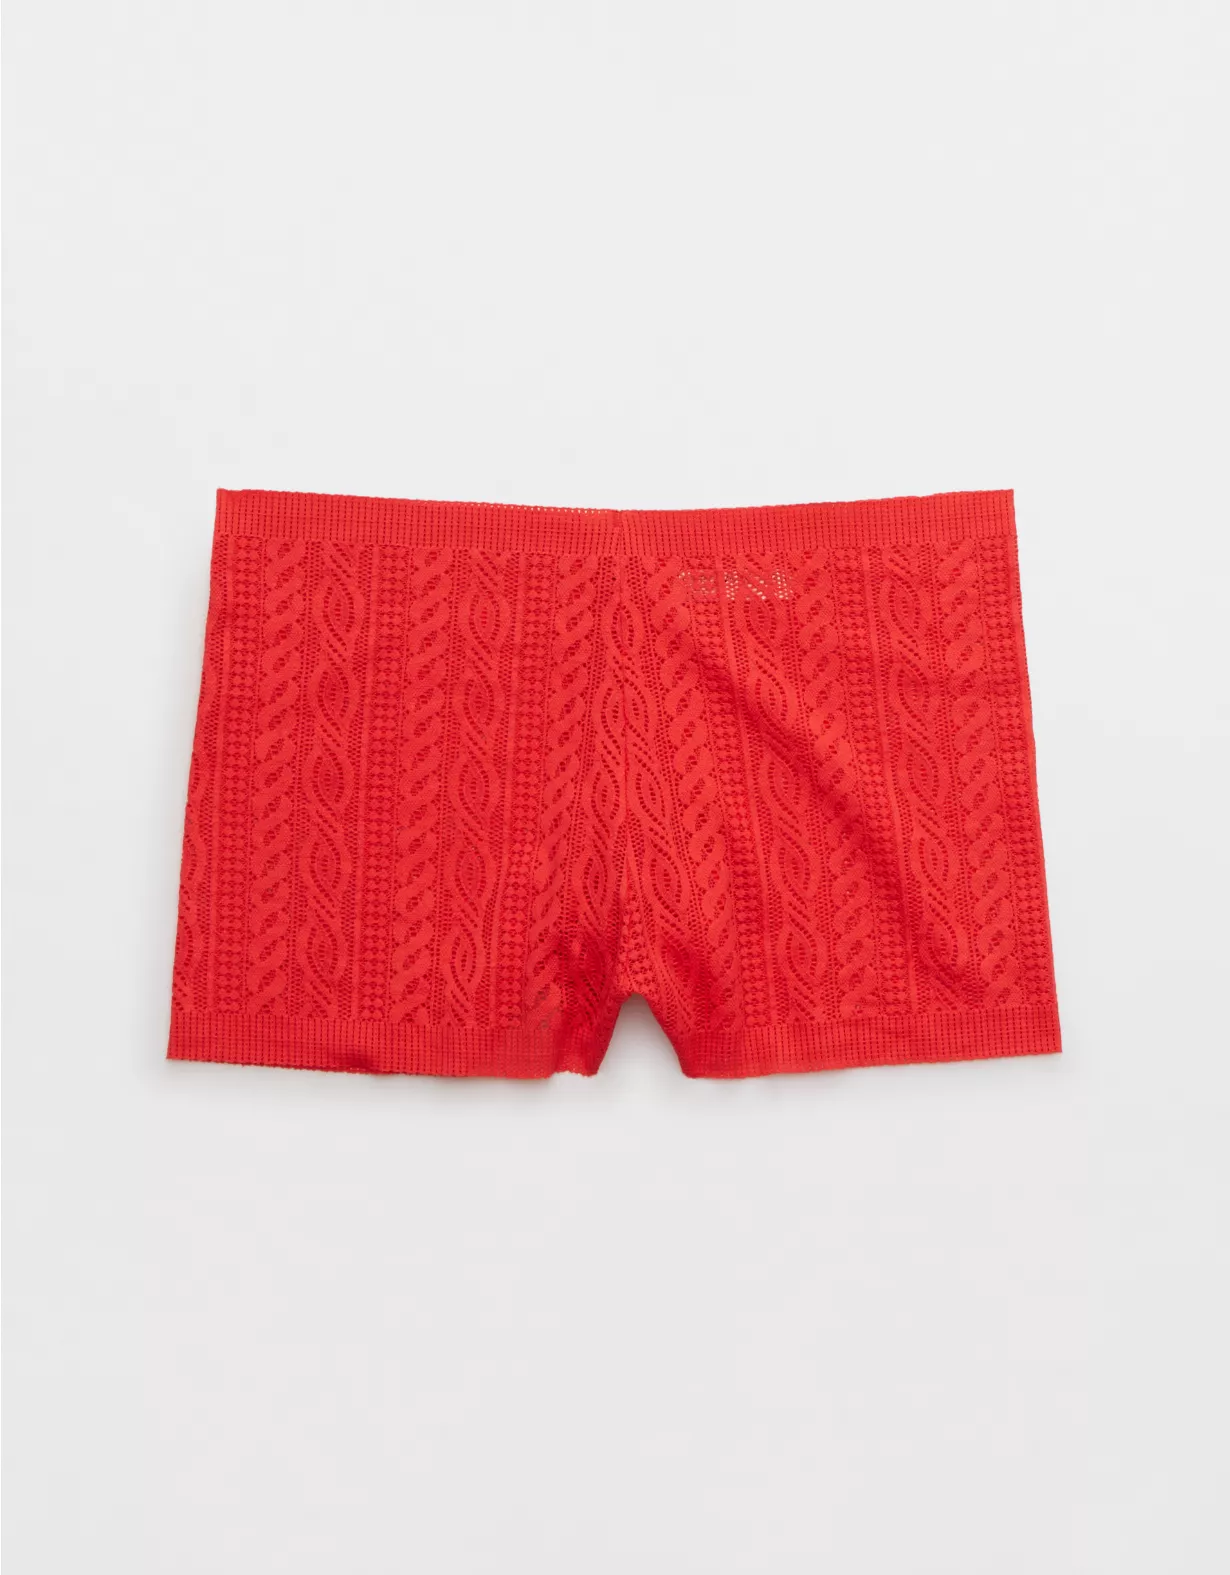 Aerie Cable Lace Boyshort Underwear